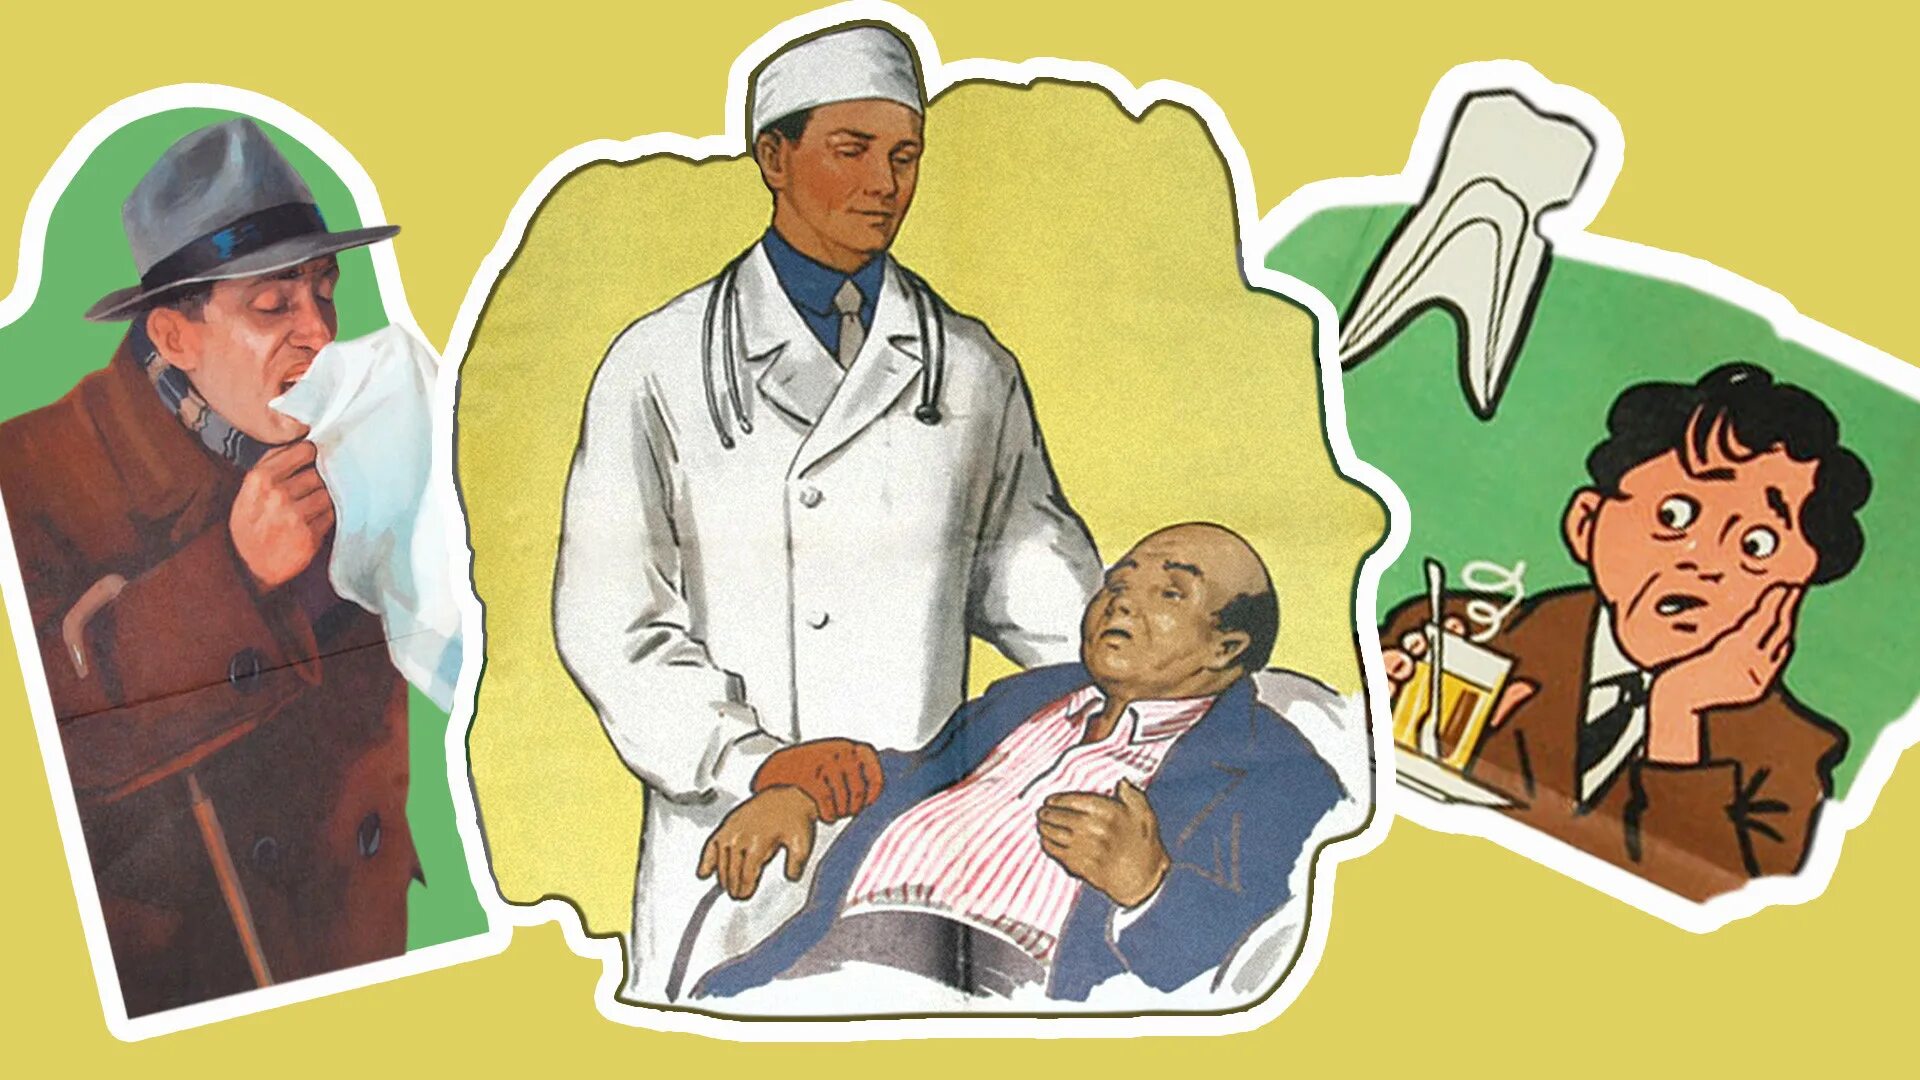 Советские плакаты. Плакат медицина. Советские врачебные плакаты. Советские медицинские агитационные плакаты.